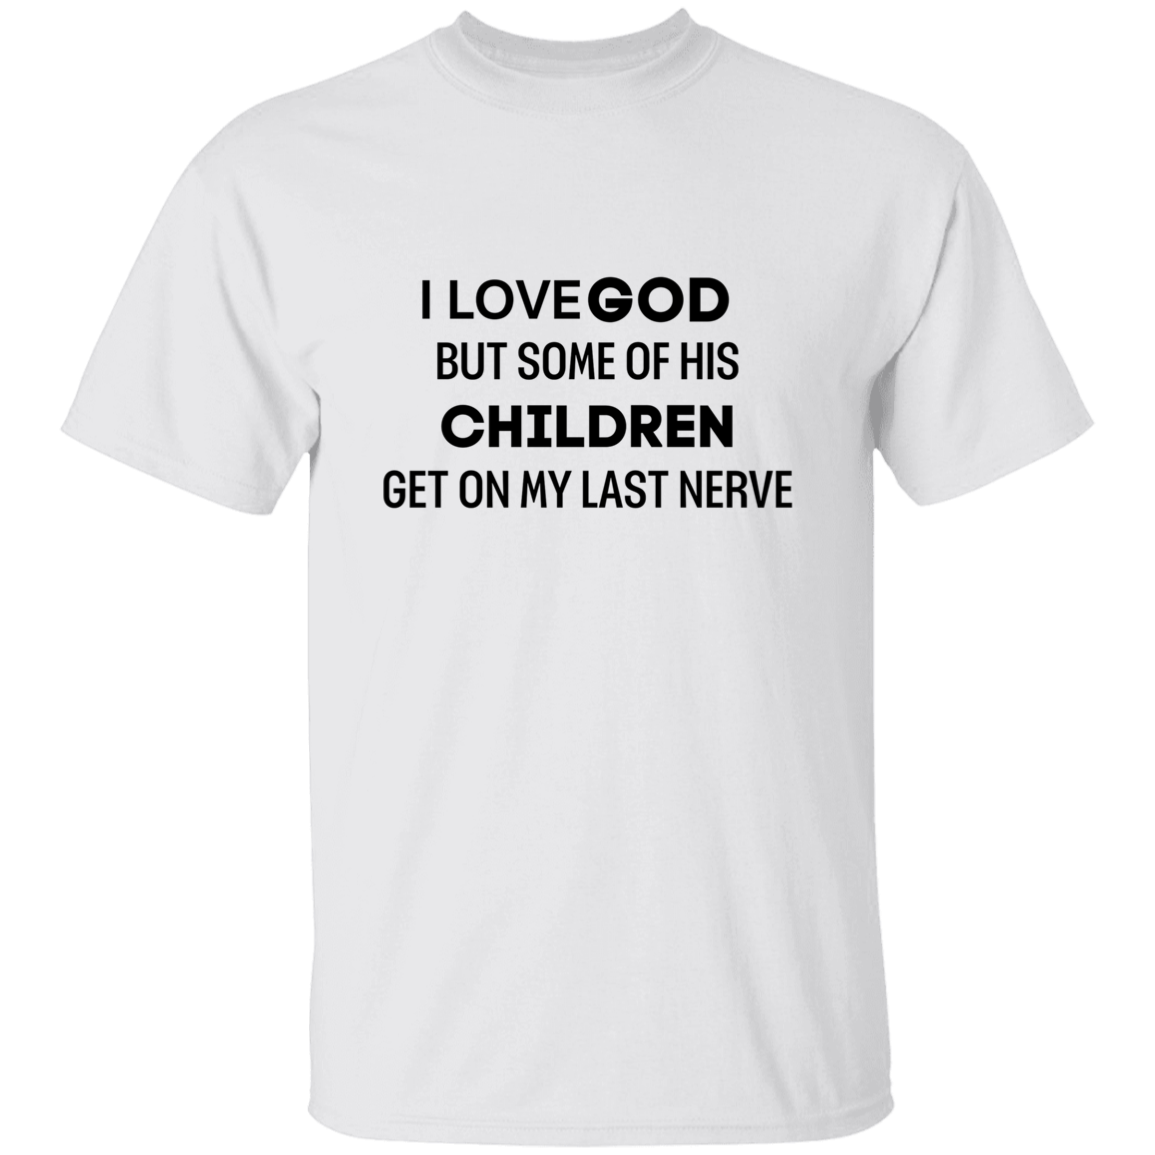 I Love God But Some.. 5.3 oz. T-Shirt